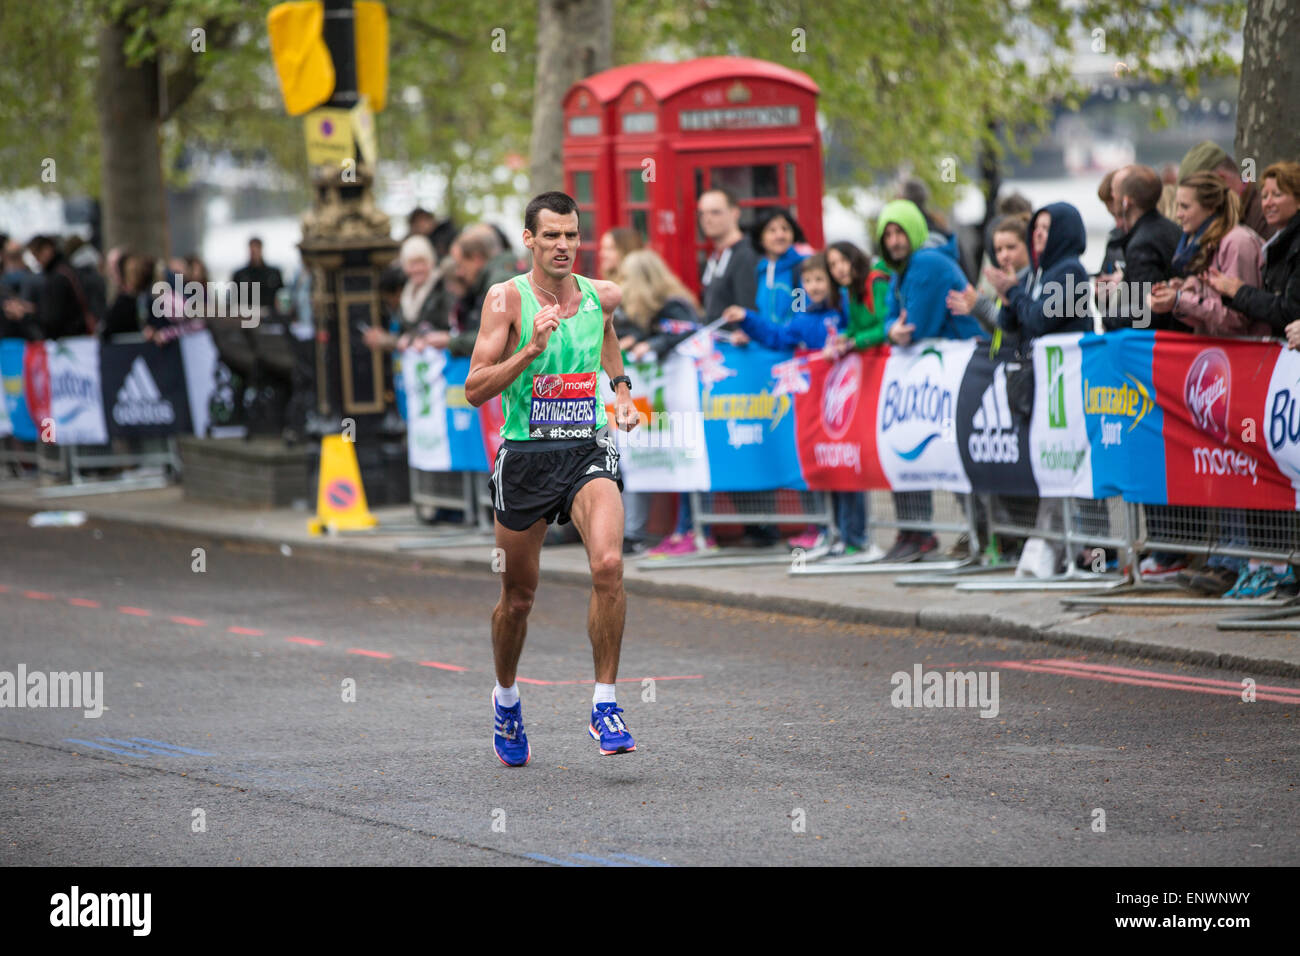 Virgin London Marathon 2015 Koen Raymaekers Netherlands Place 15th Stock Photo